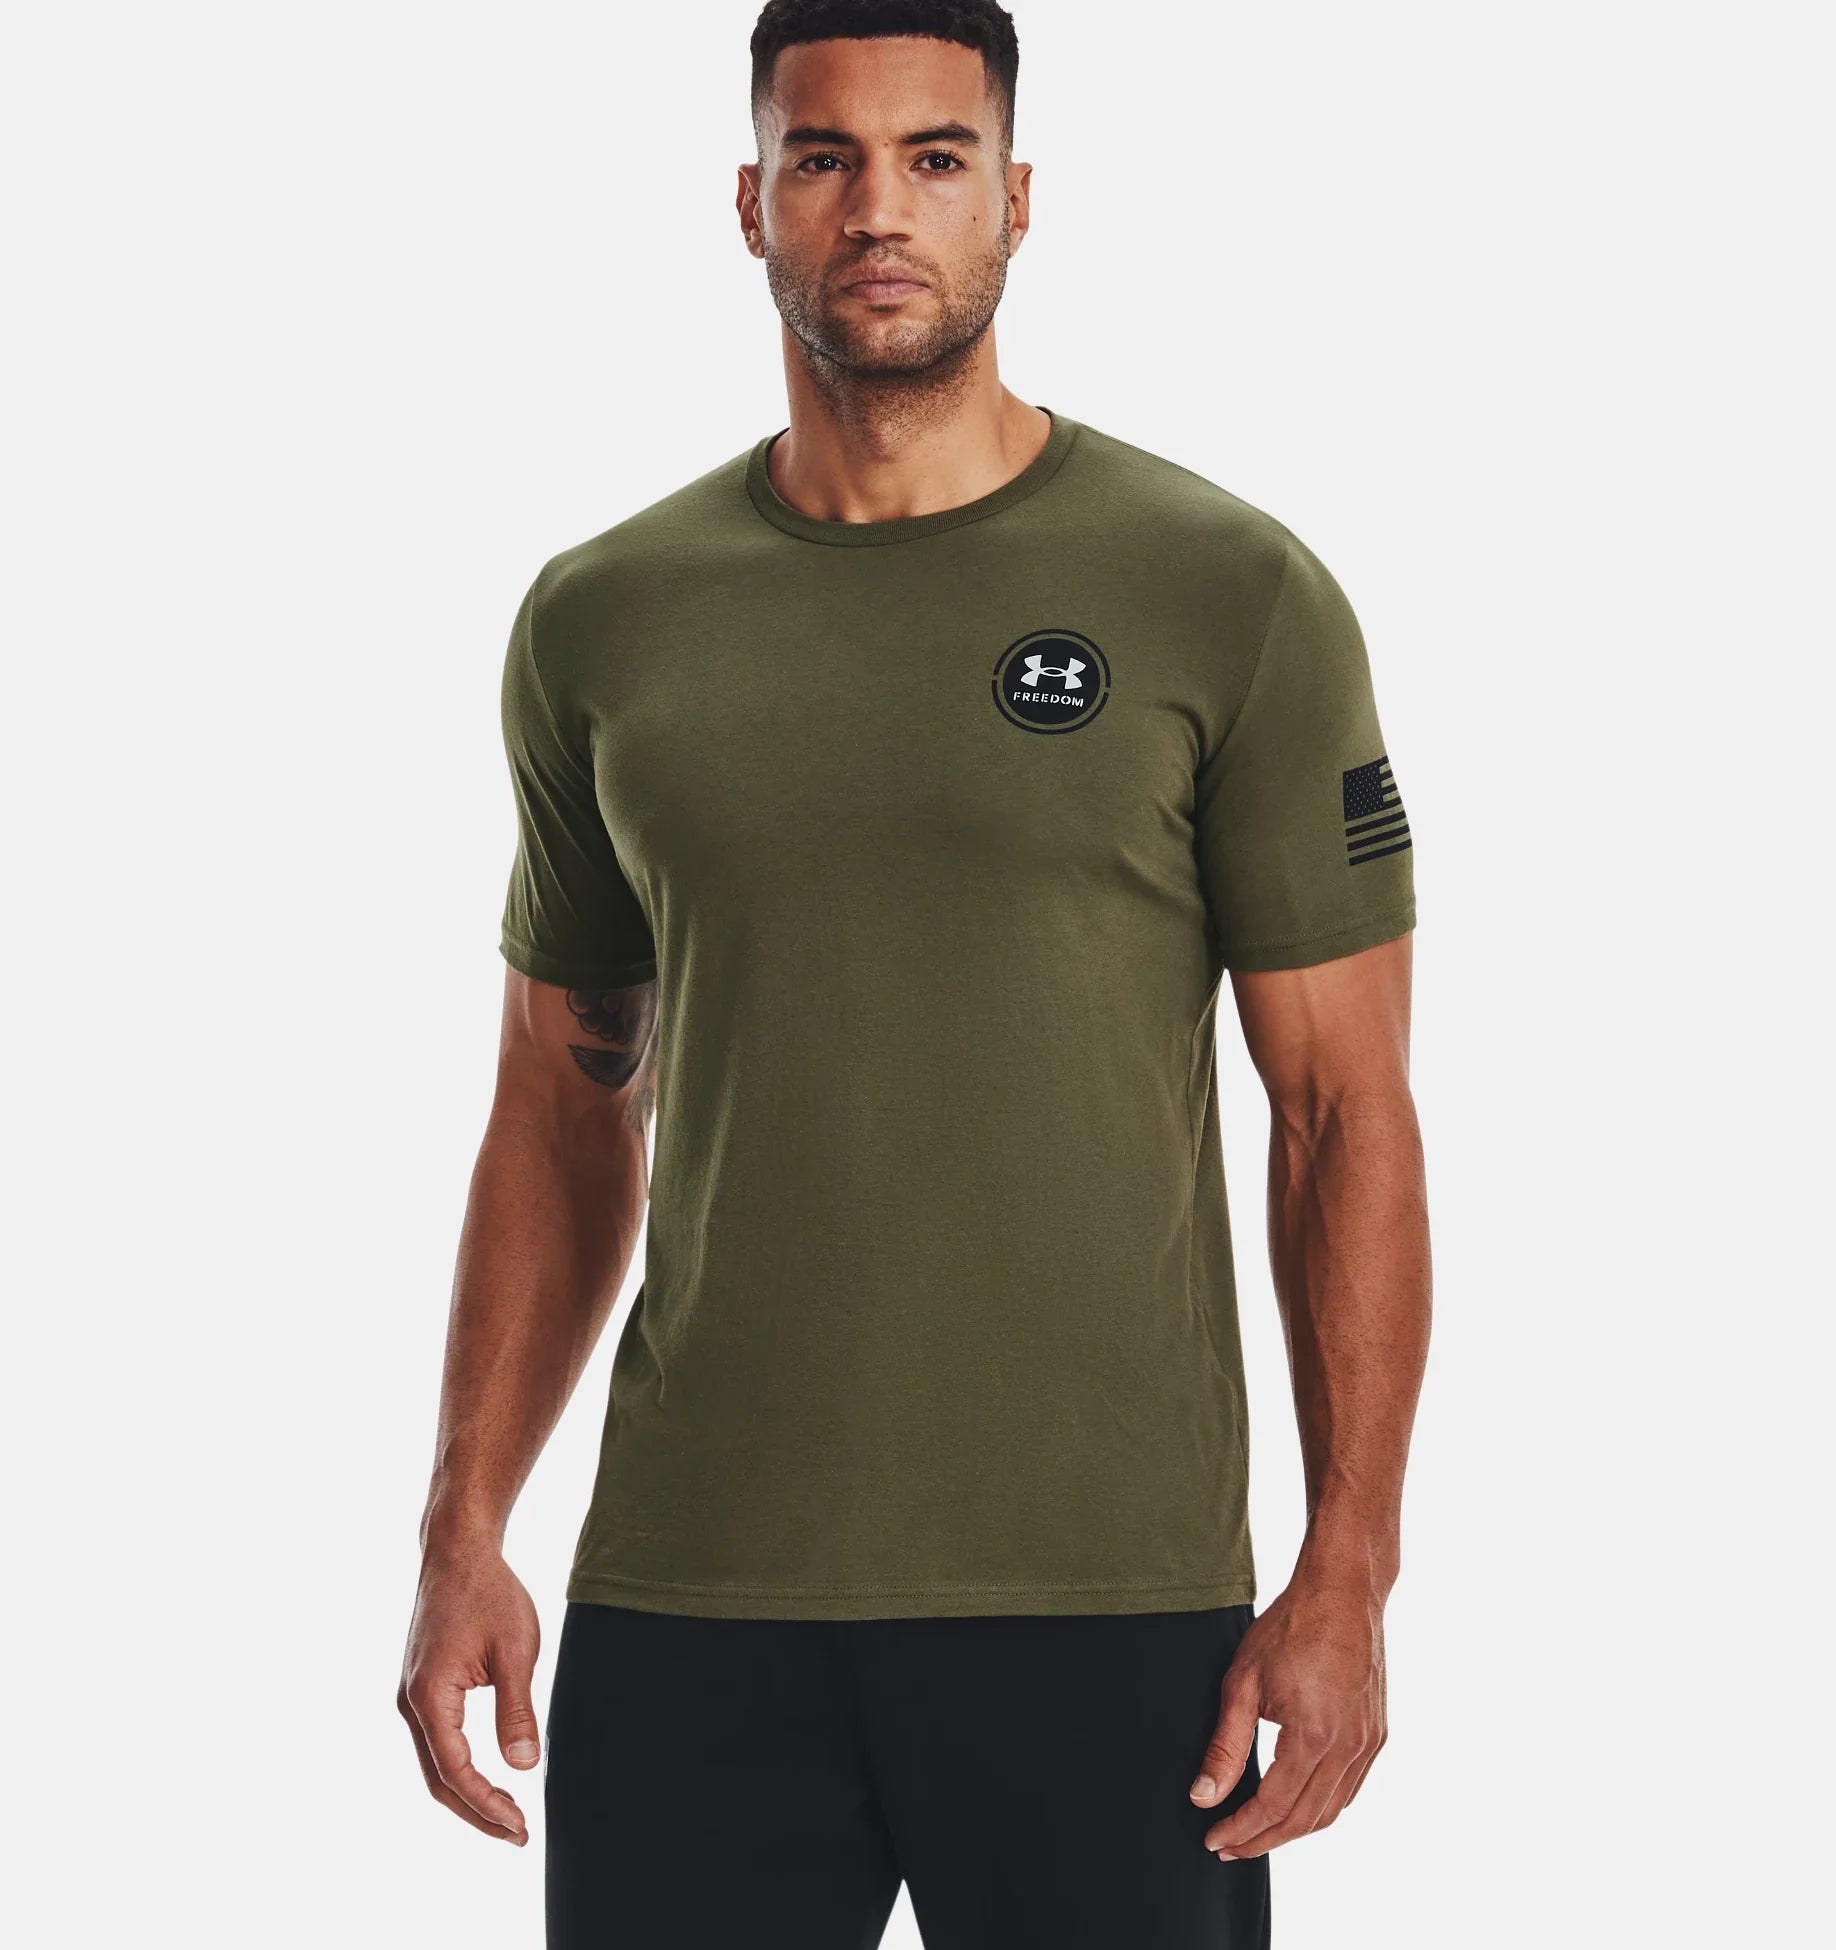 Under Armour UA Tactical Cotton T-Shirts - Women's